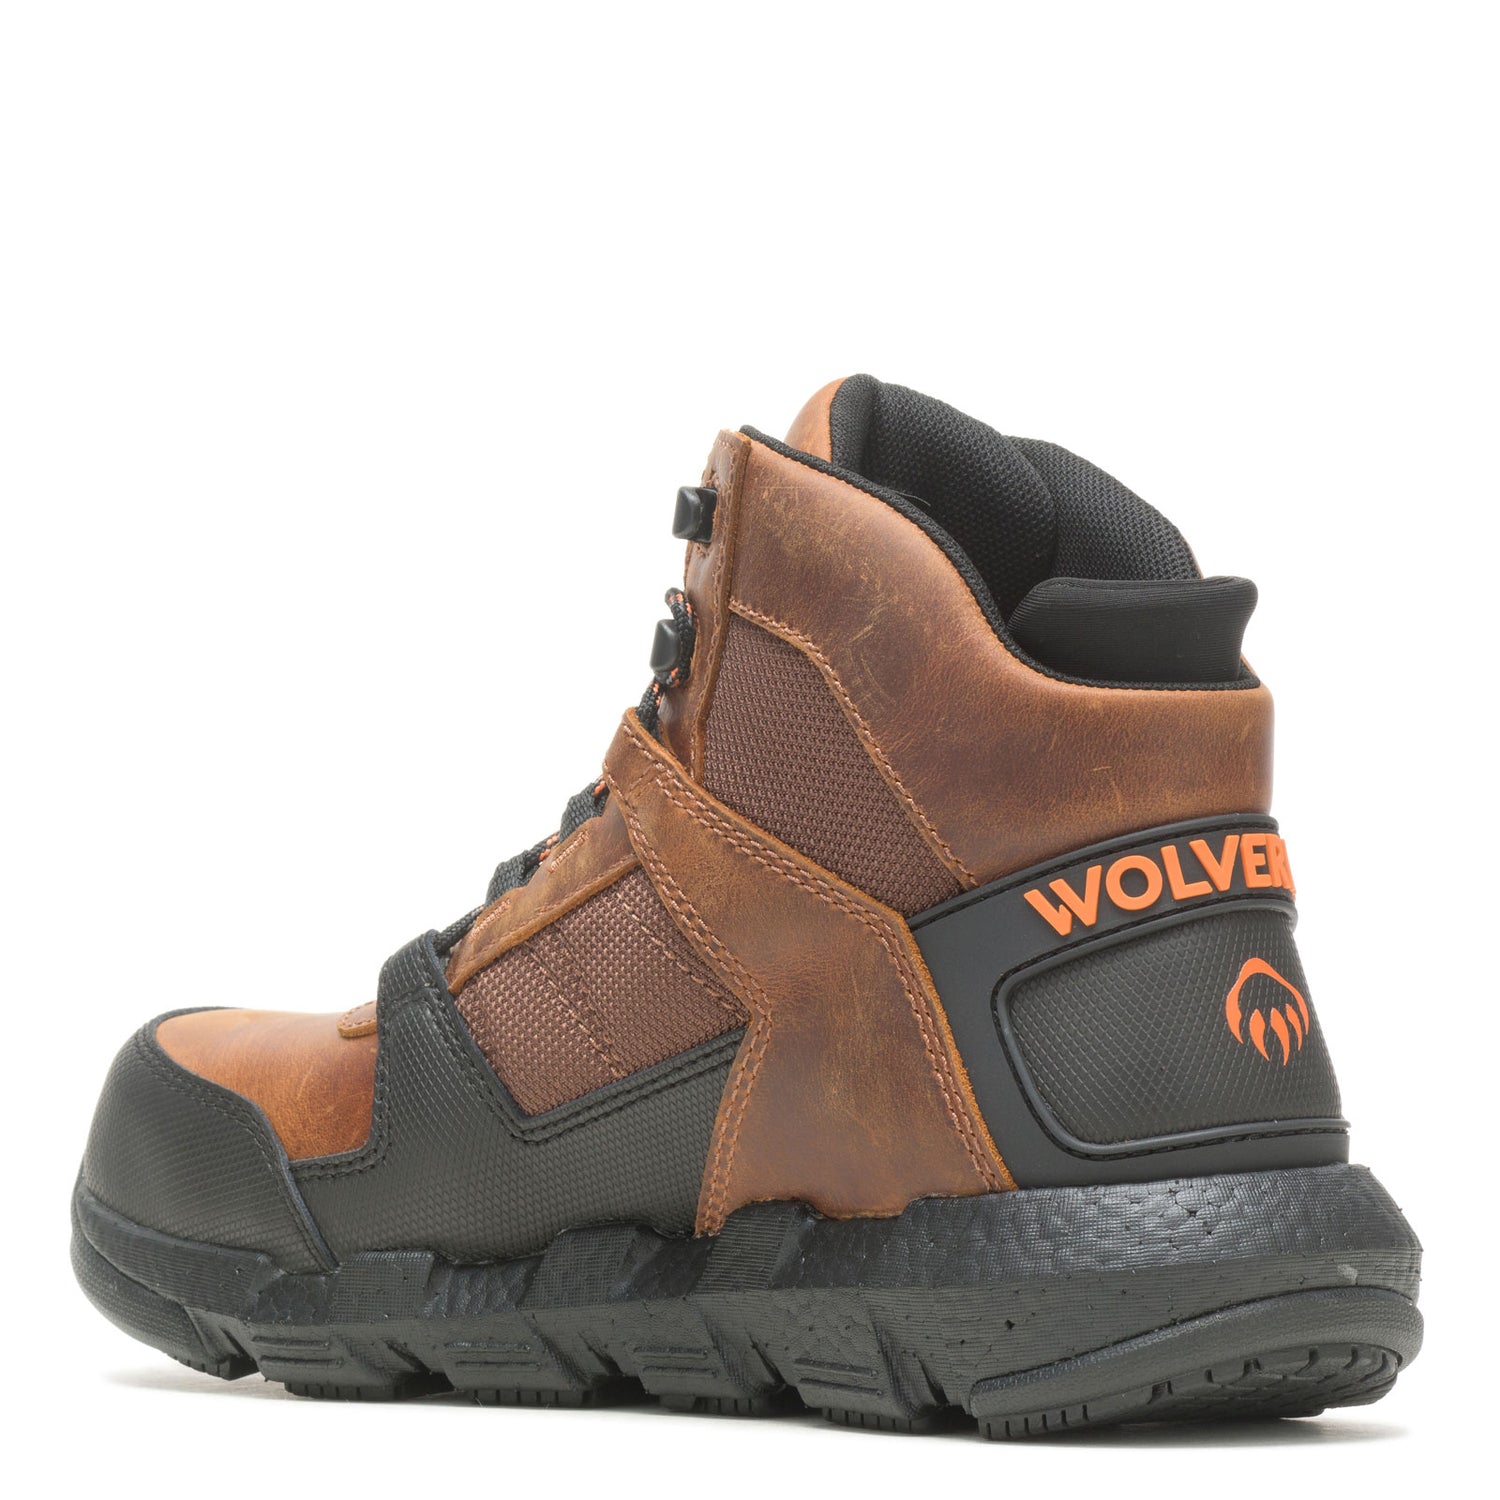 Peltz Shoes  Men's Wolverine Rev UltraSpring DuraShocks Vent Composite Toe Boot TOBACCO W221034